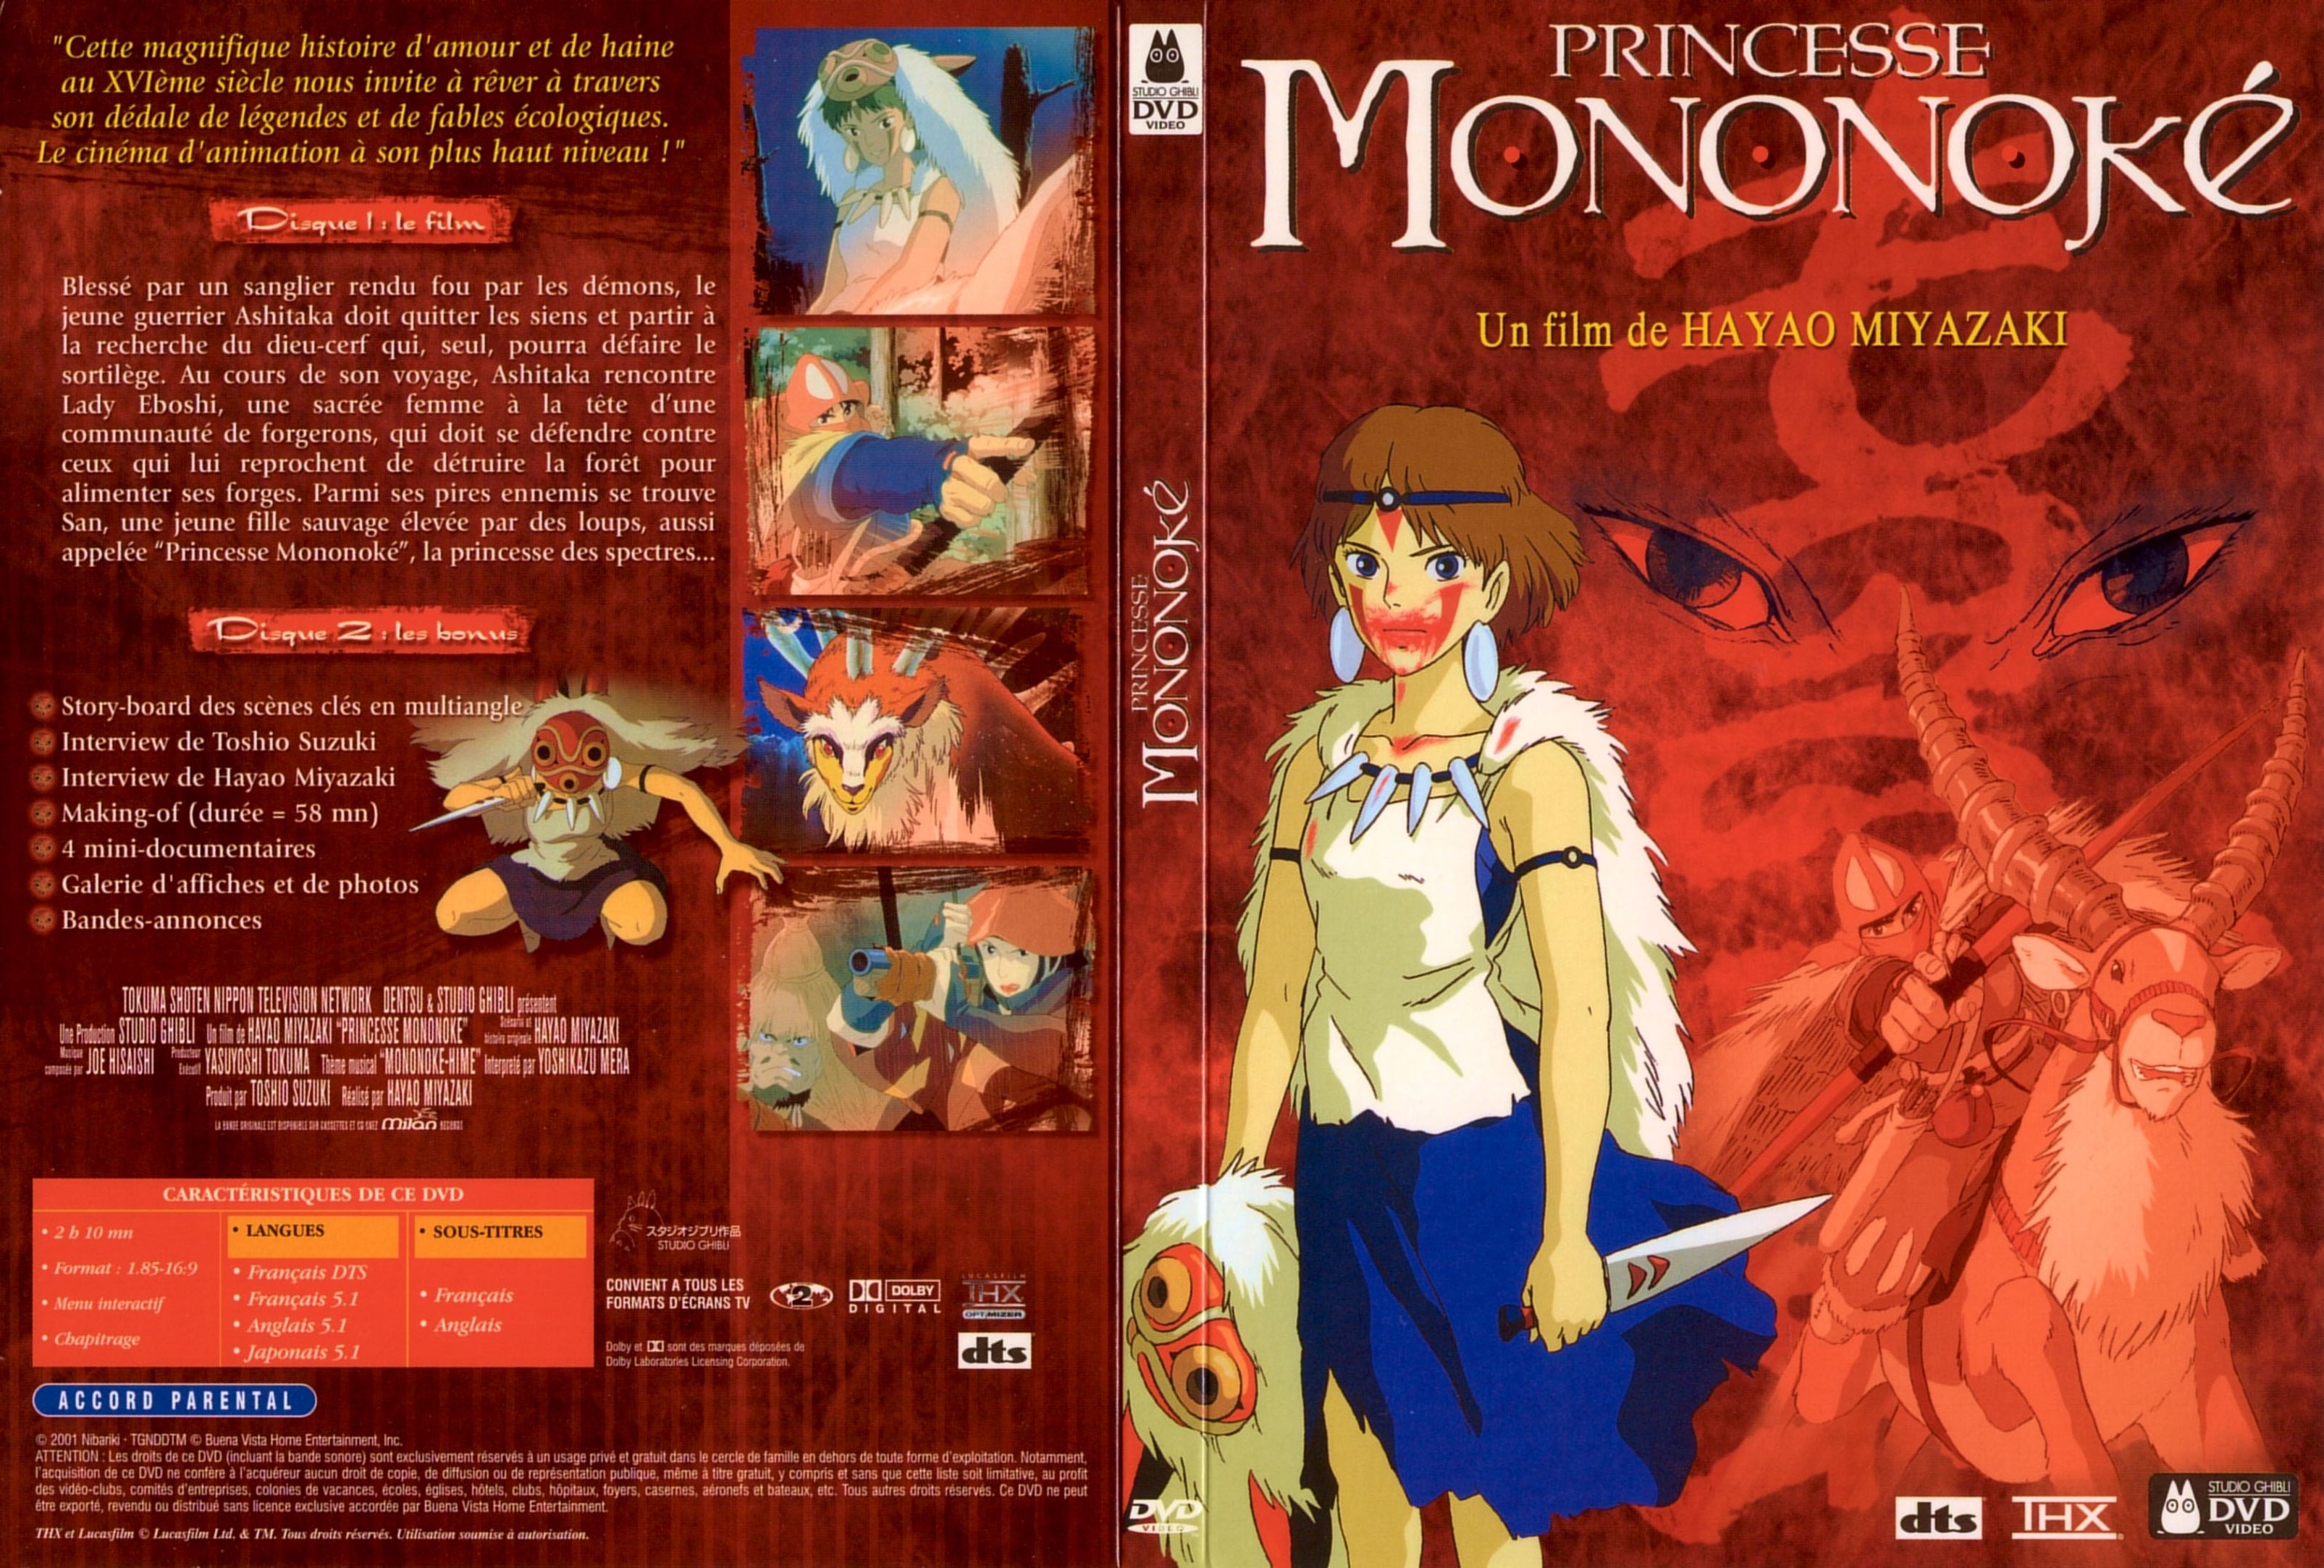 Jaquette DVD Princesse Mononoke